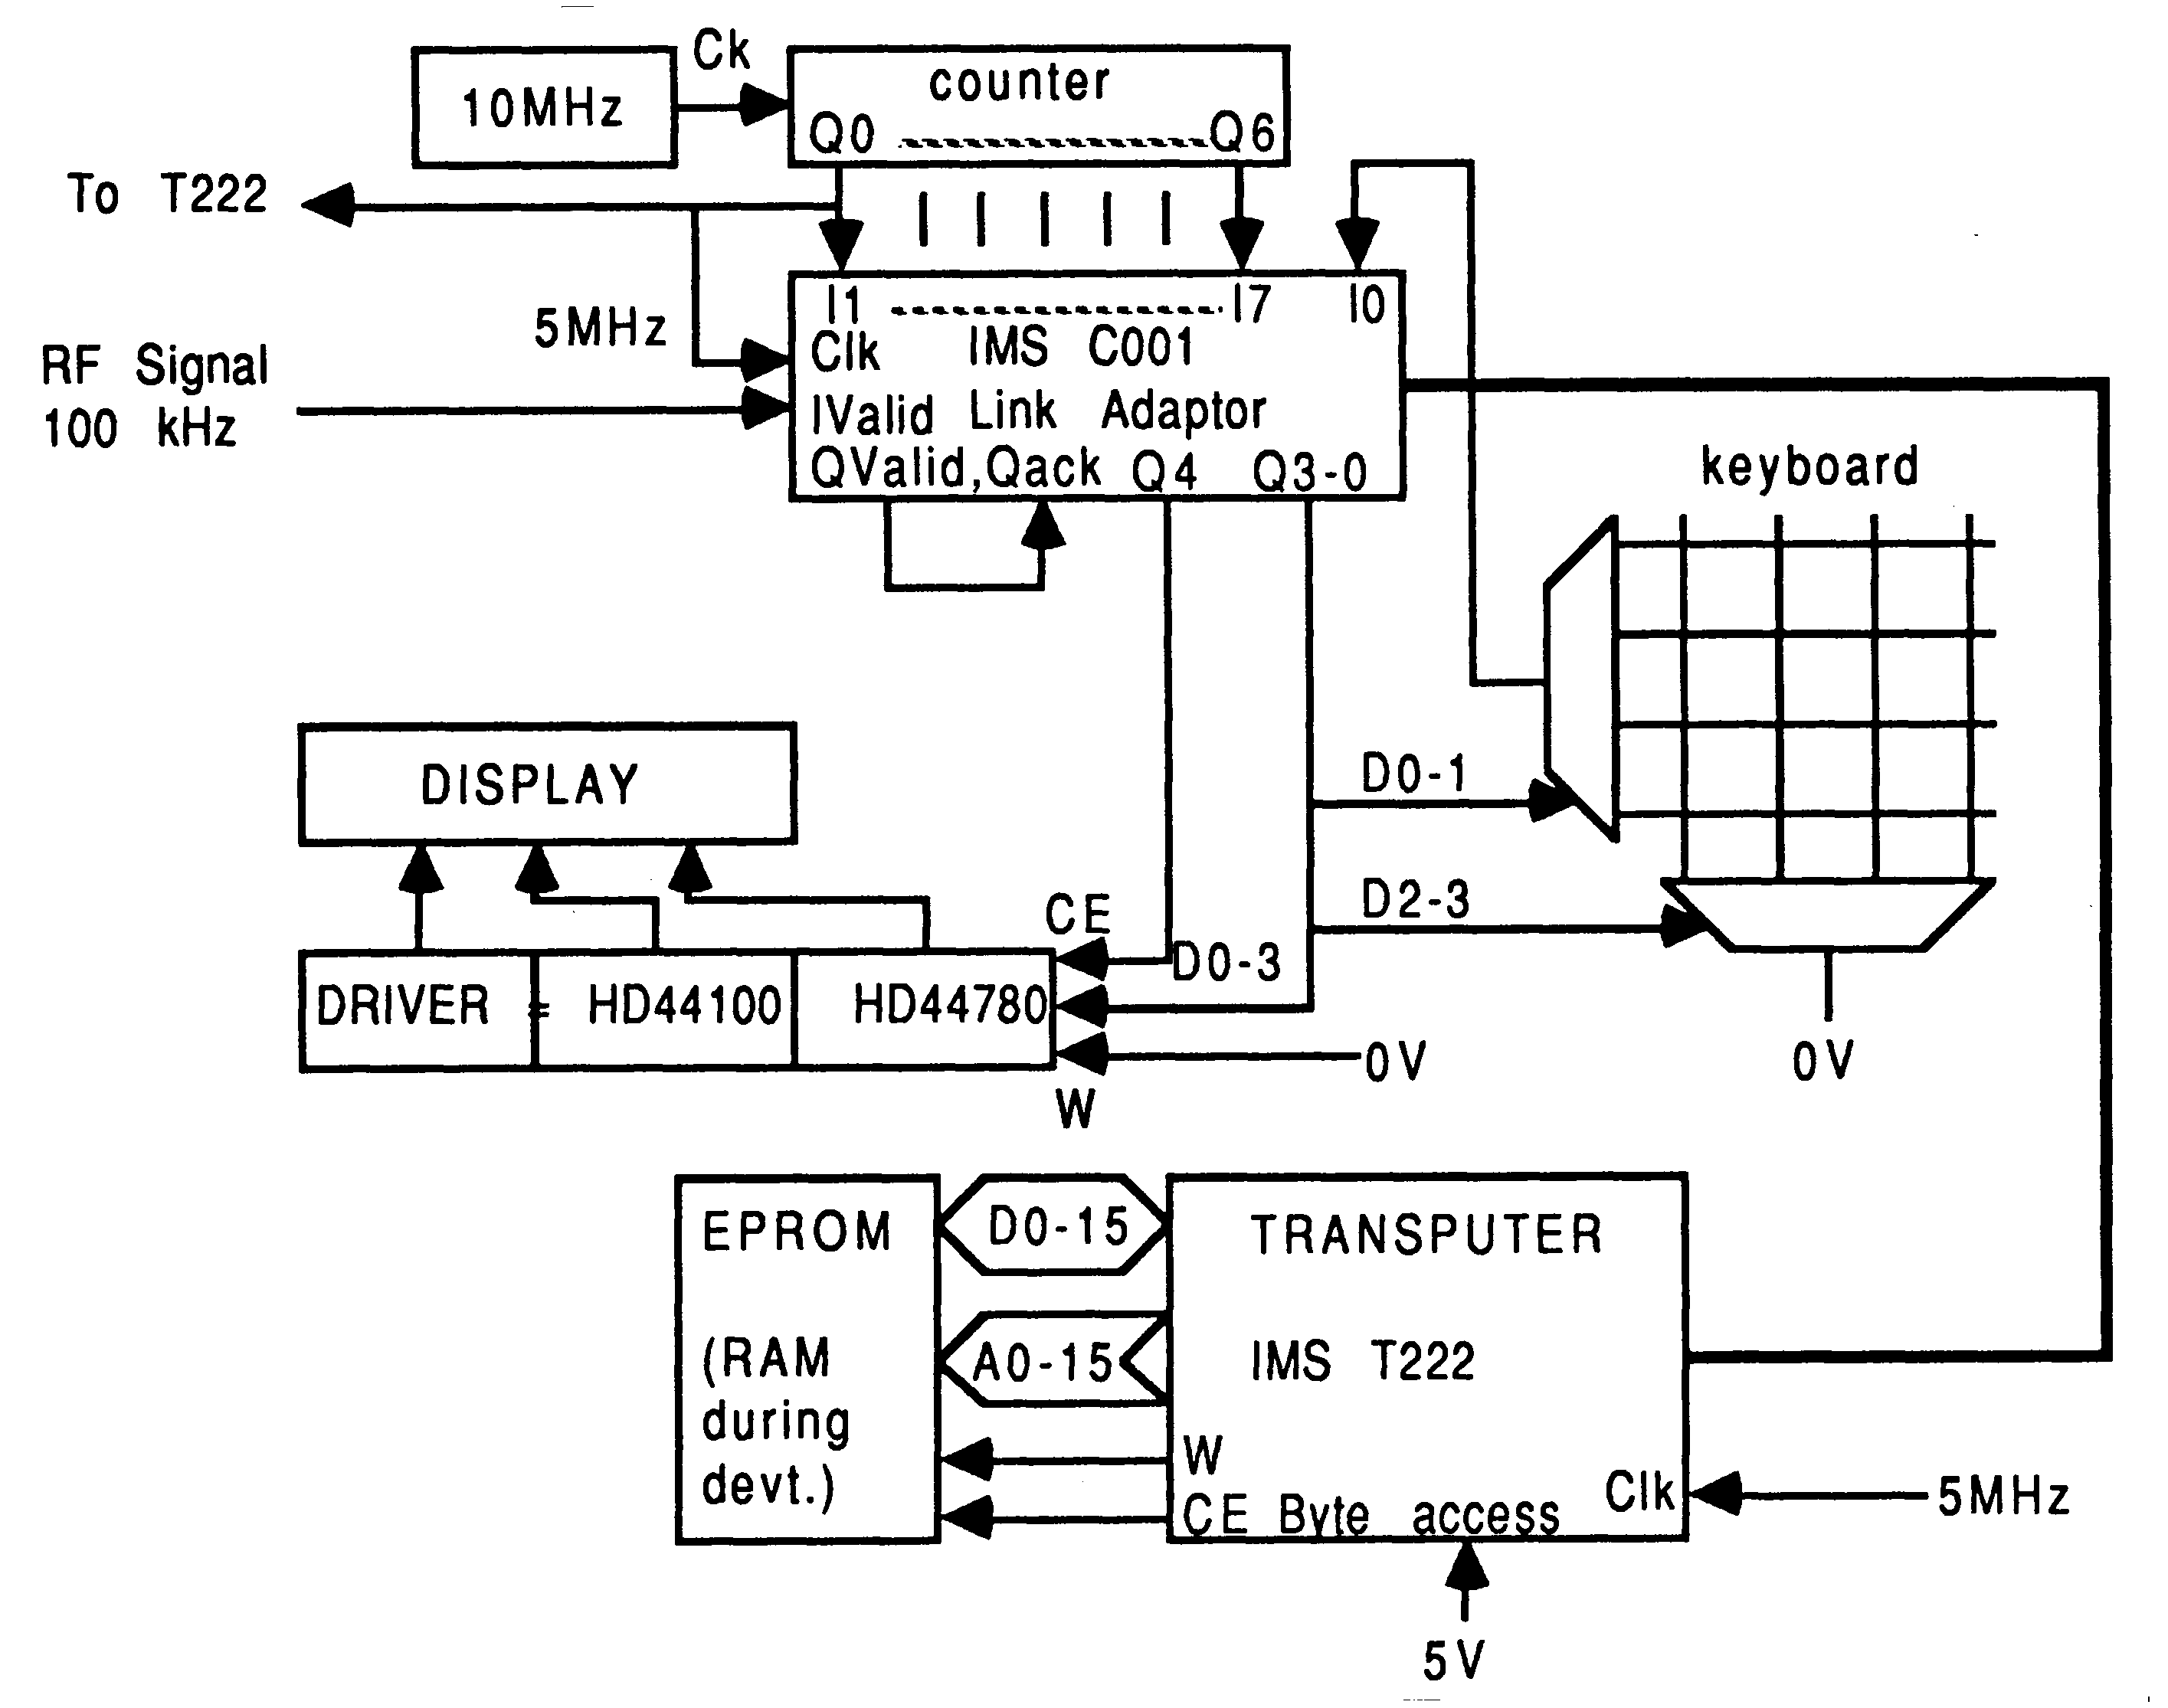 Digital circuitry